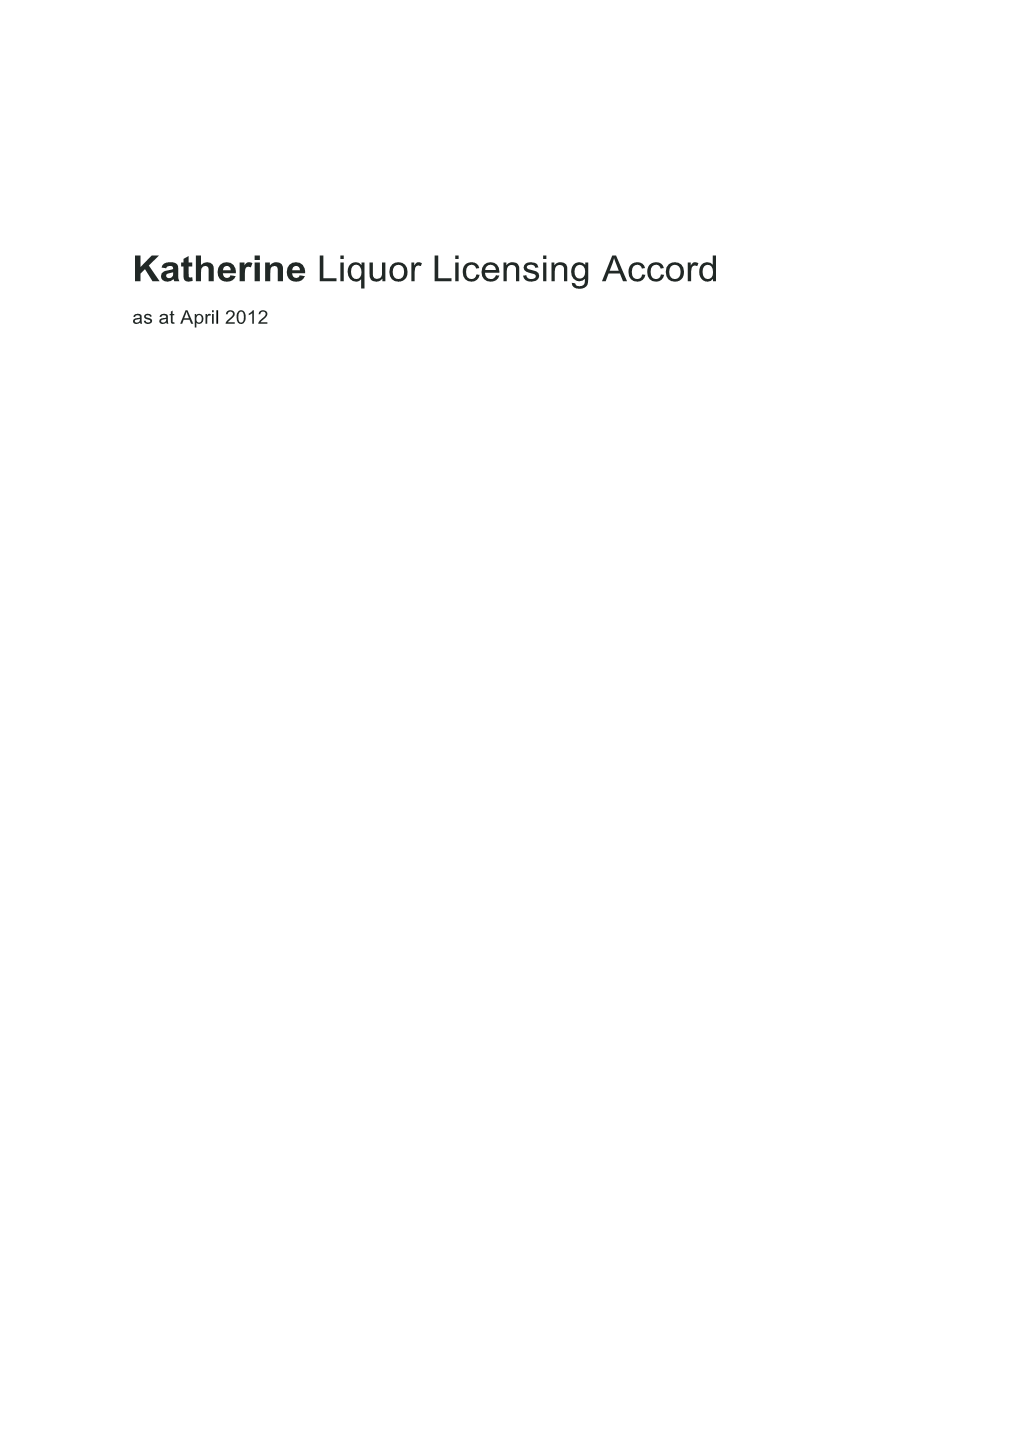 Local Liquor Accord Katherine